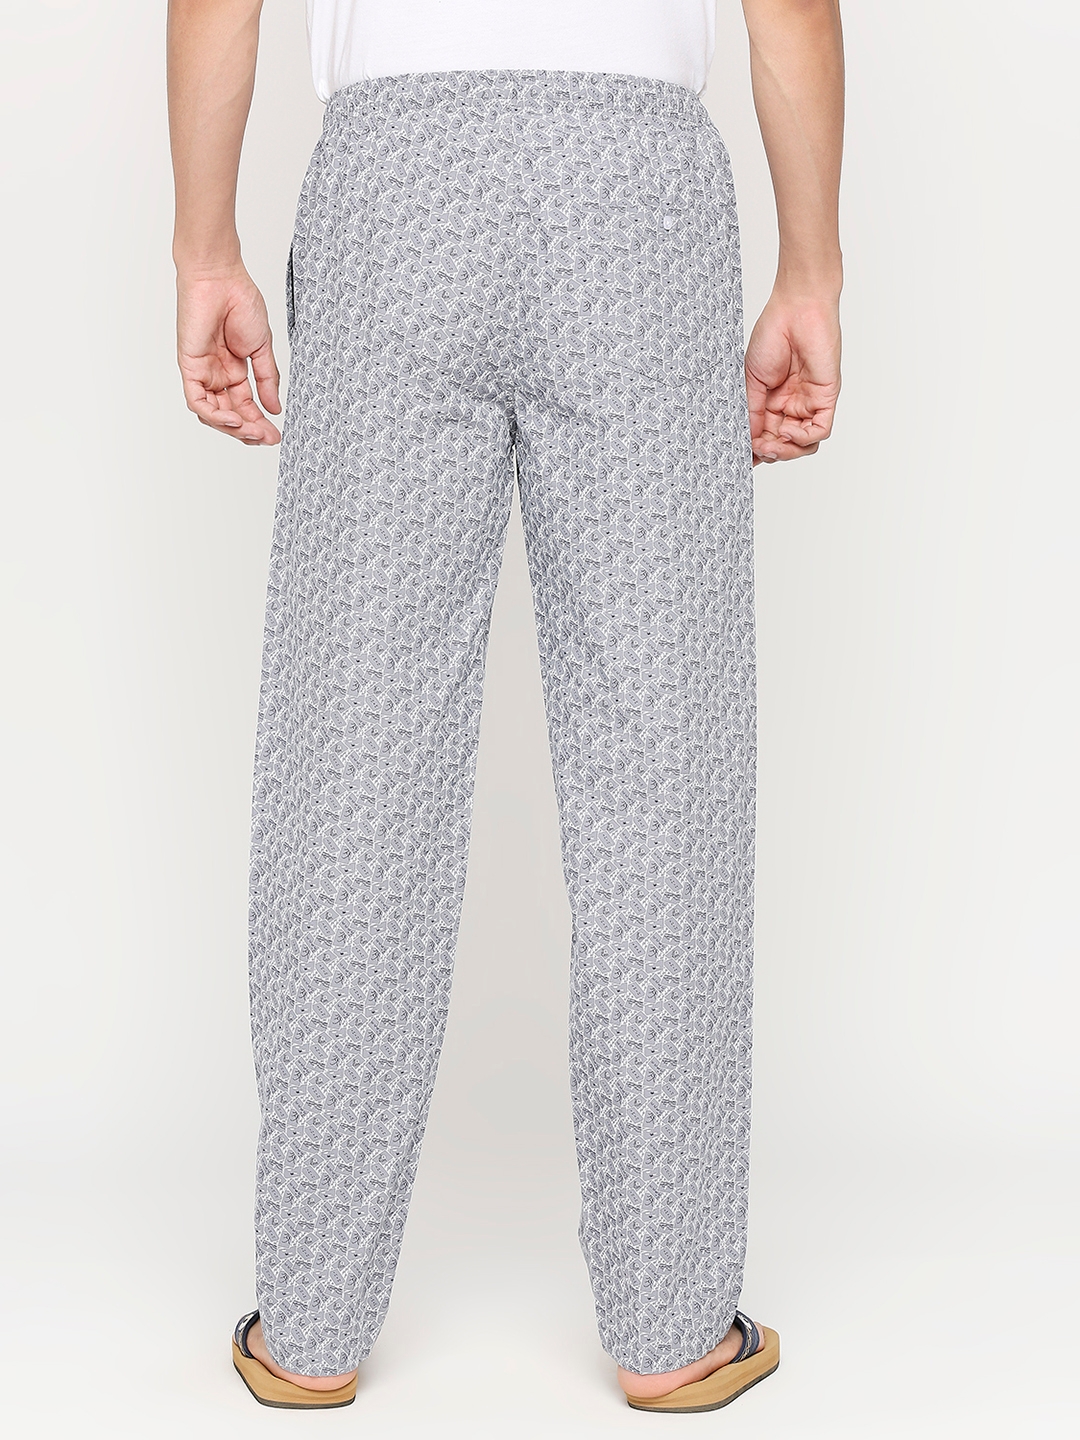 Spykar | Underjeans by Spykar Men Grey & White Cotton Regular Fit Pyjama 3